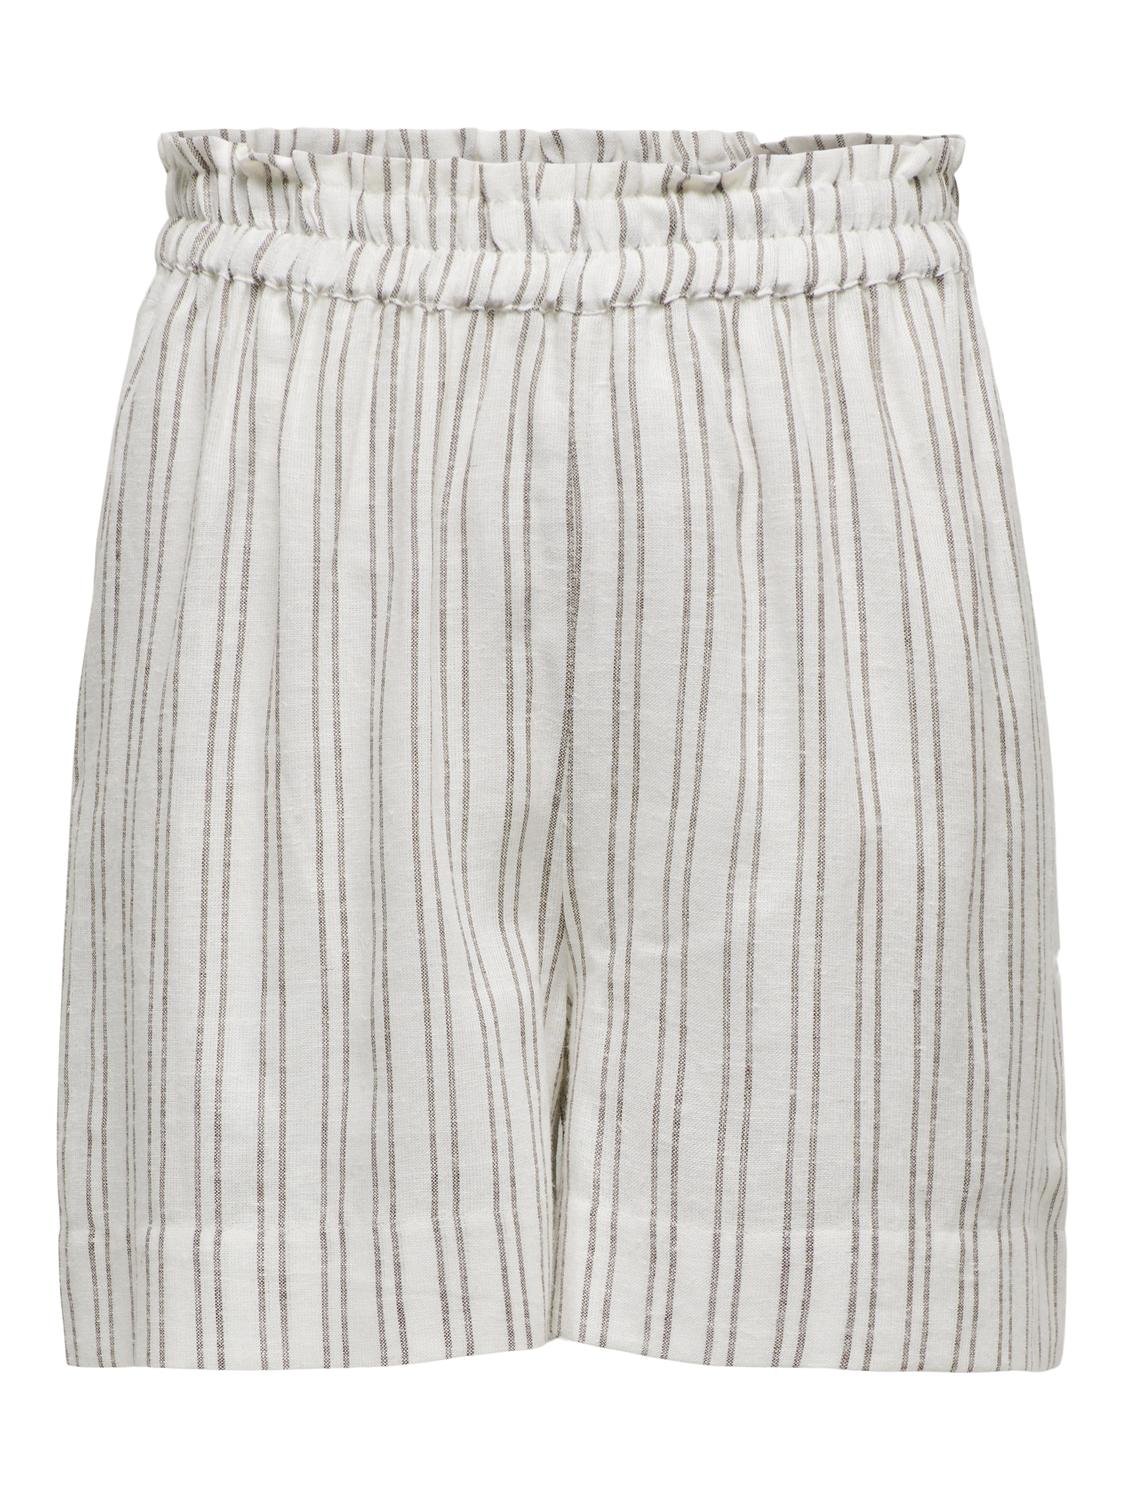 Tokyo Life Linen Shorts - White Pinstripe